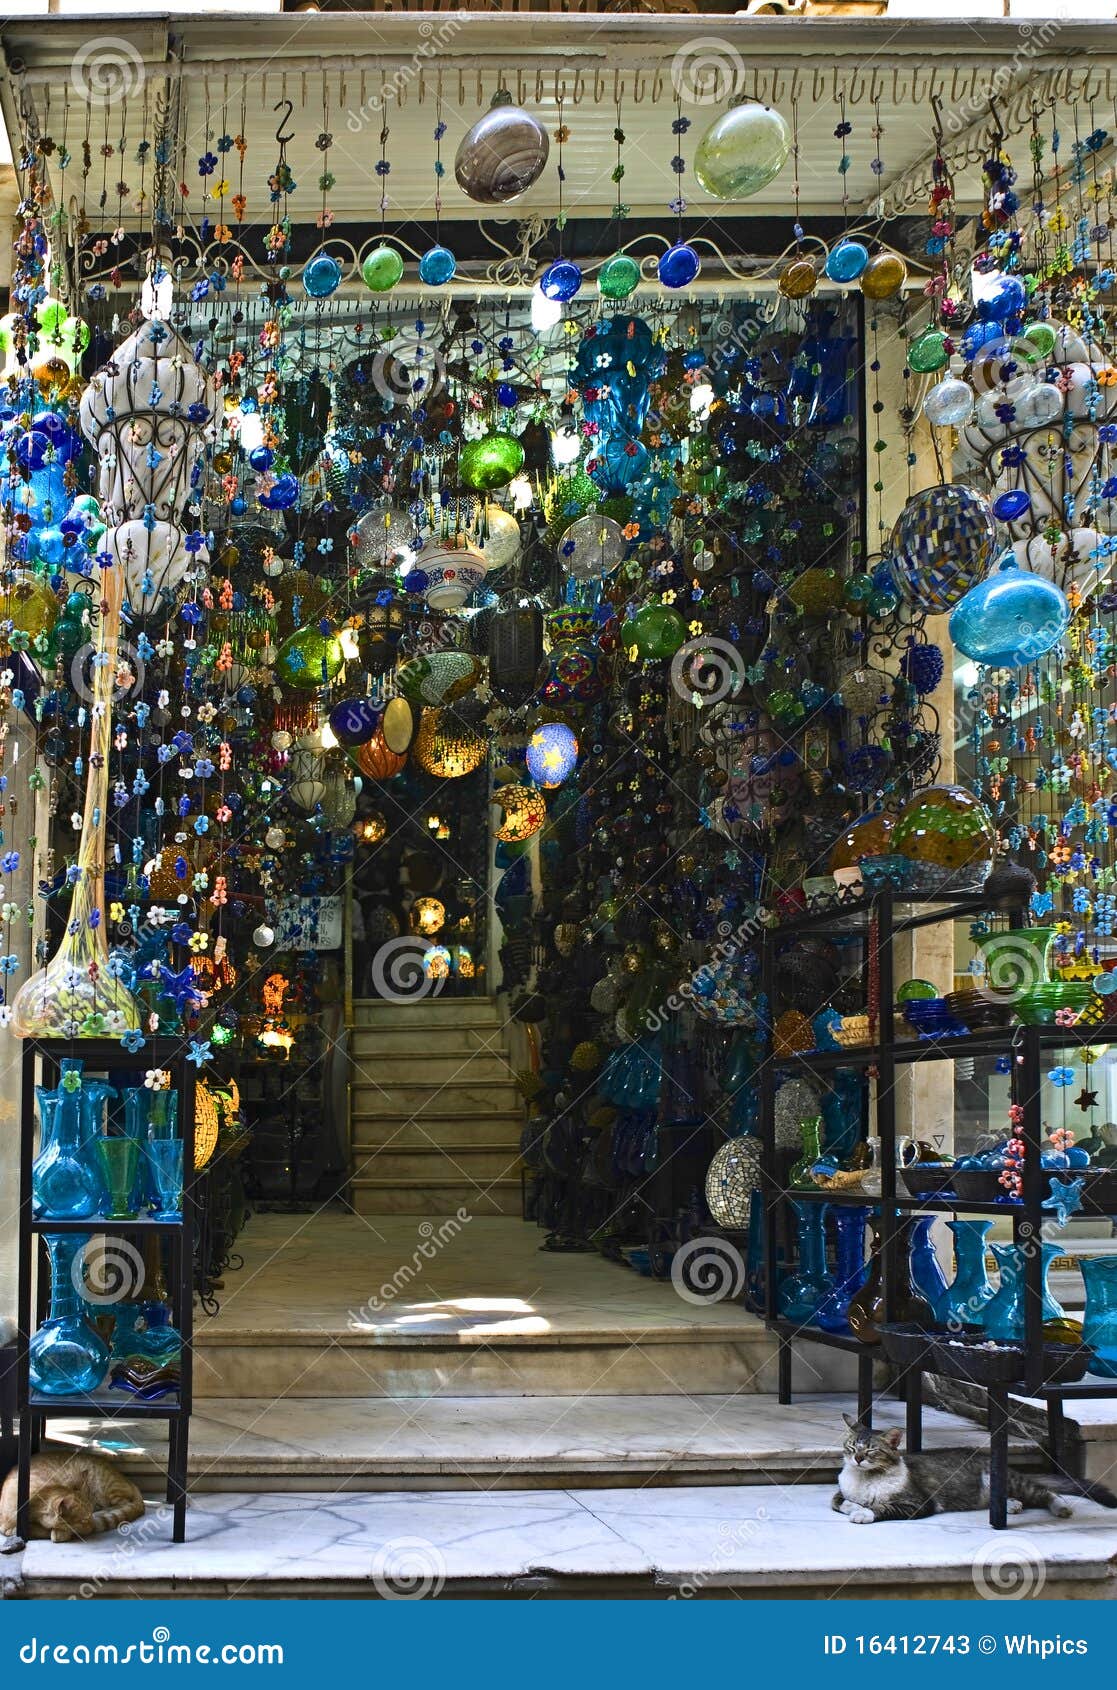 khan el-khalili glass shop